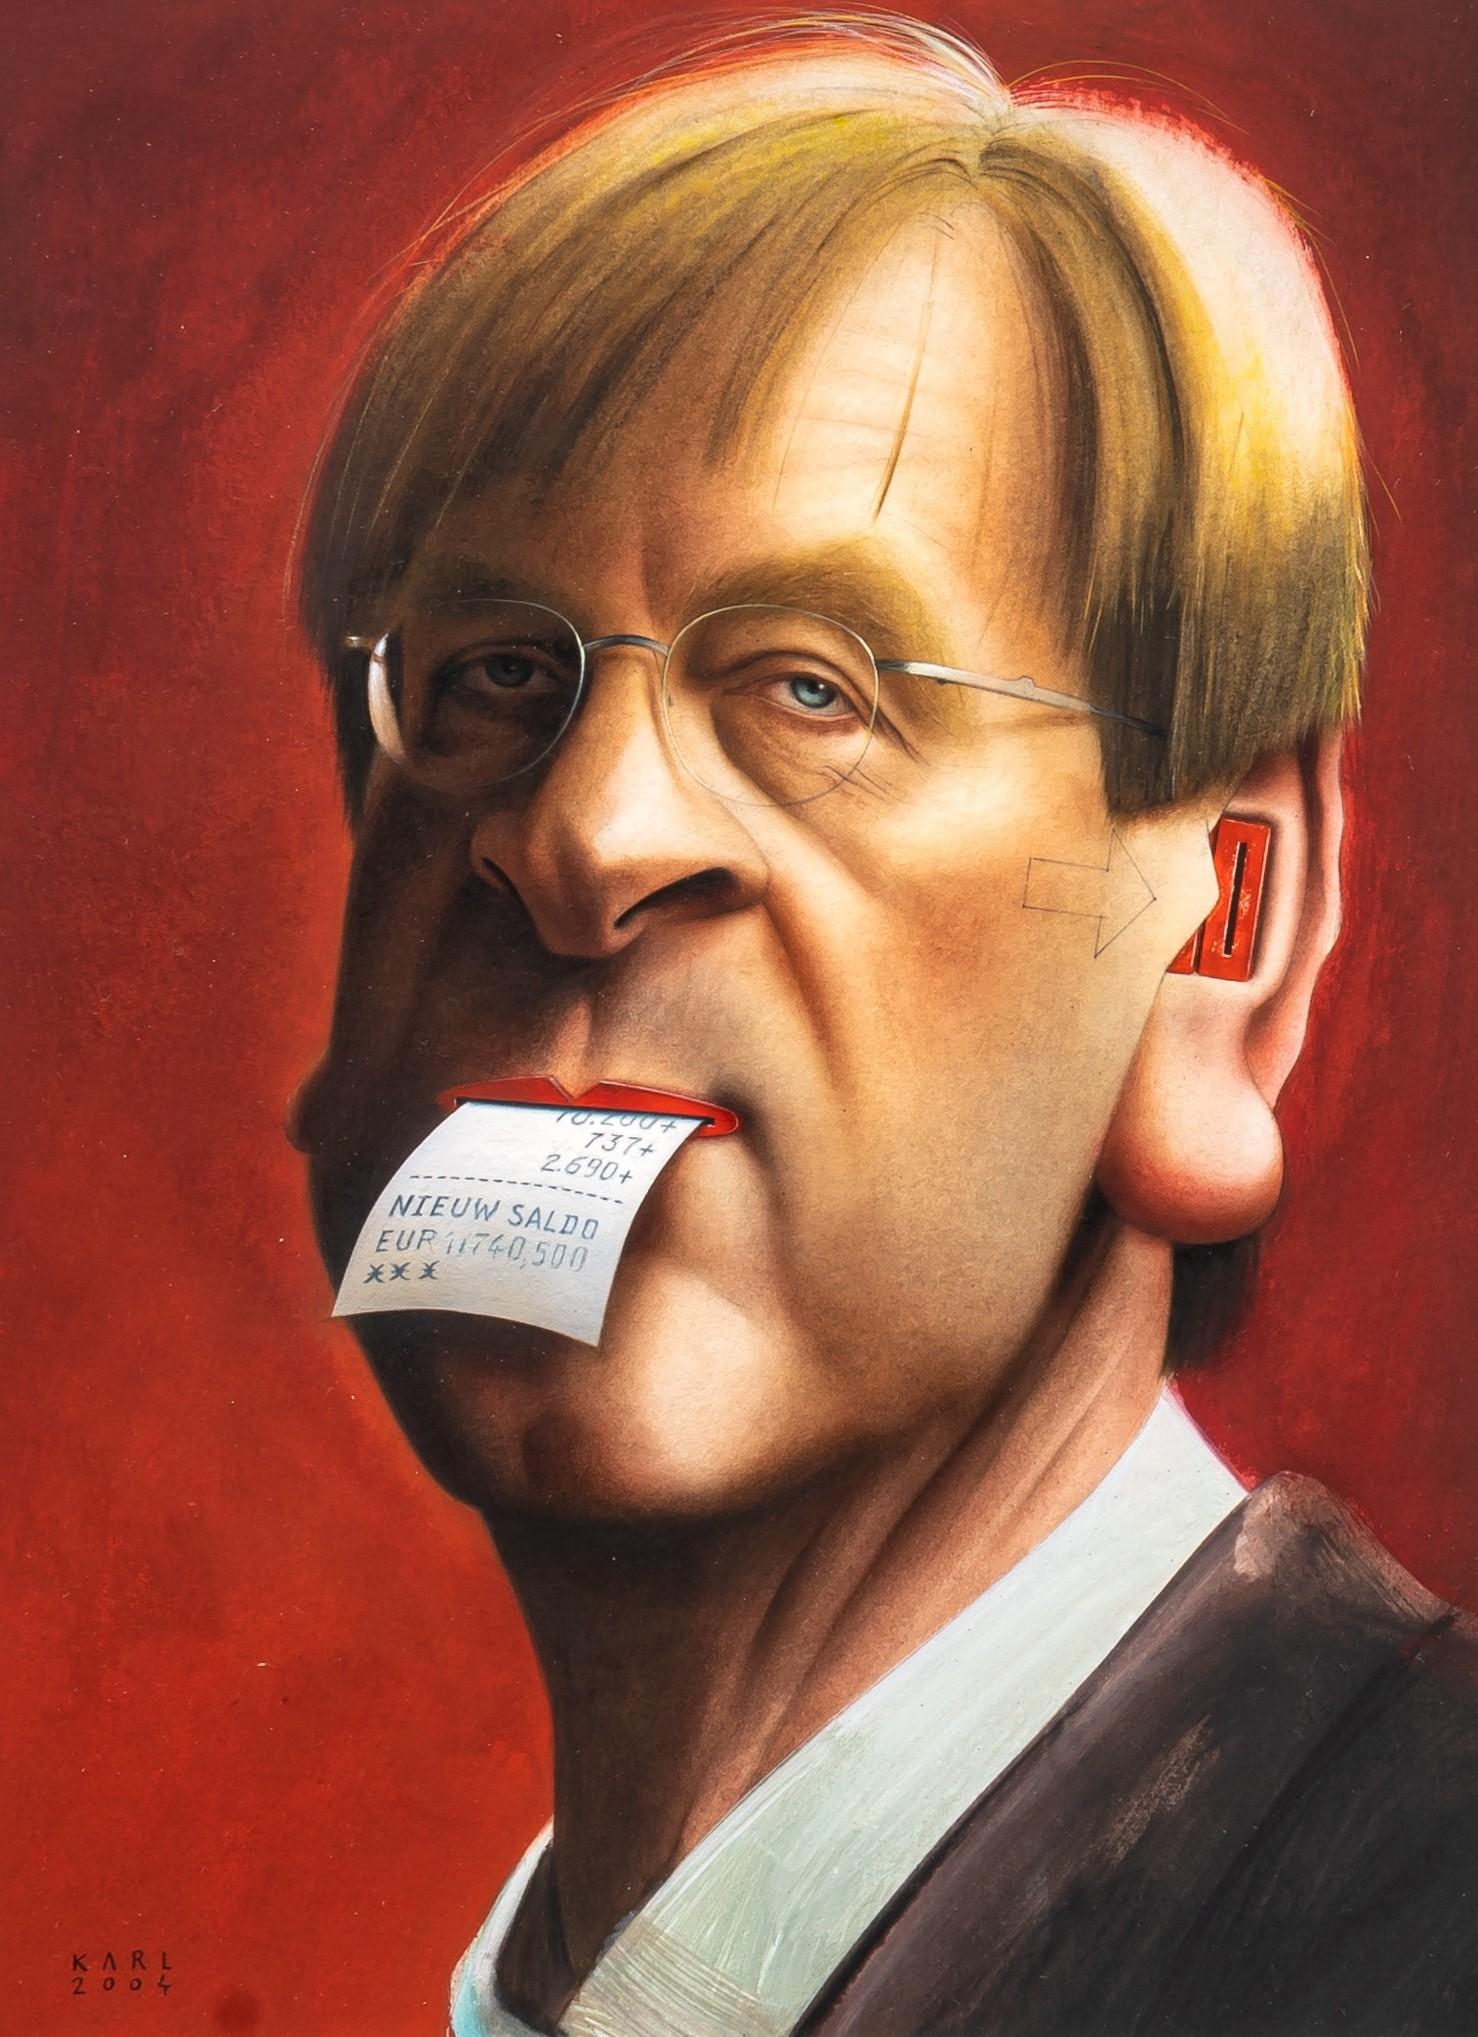 Guy Verhofstadt - Karl Meersman